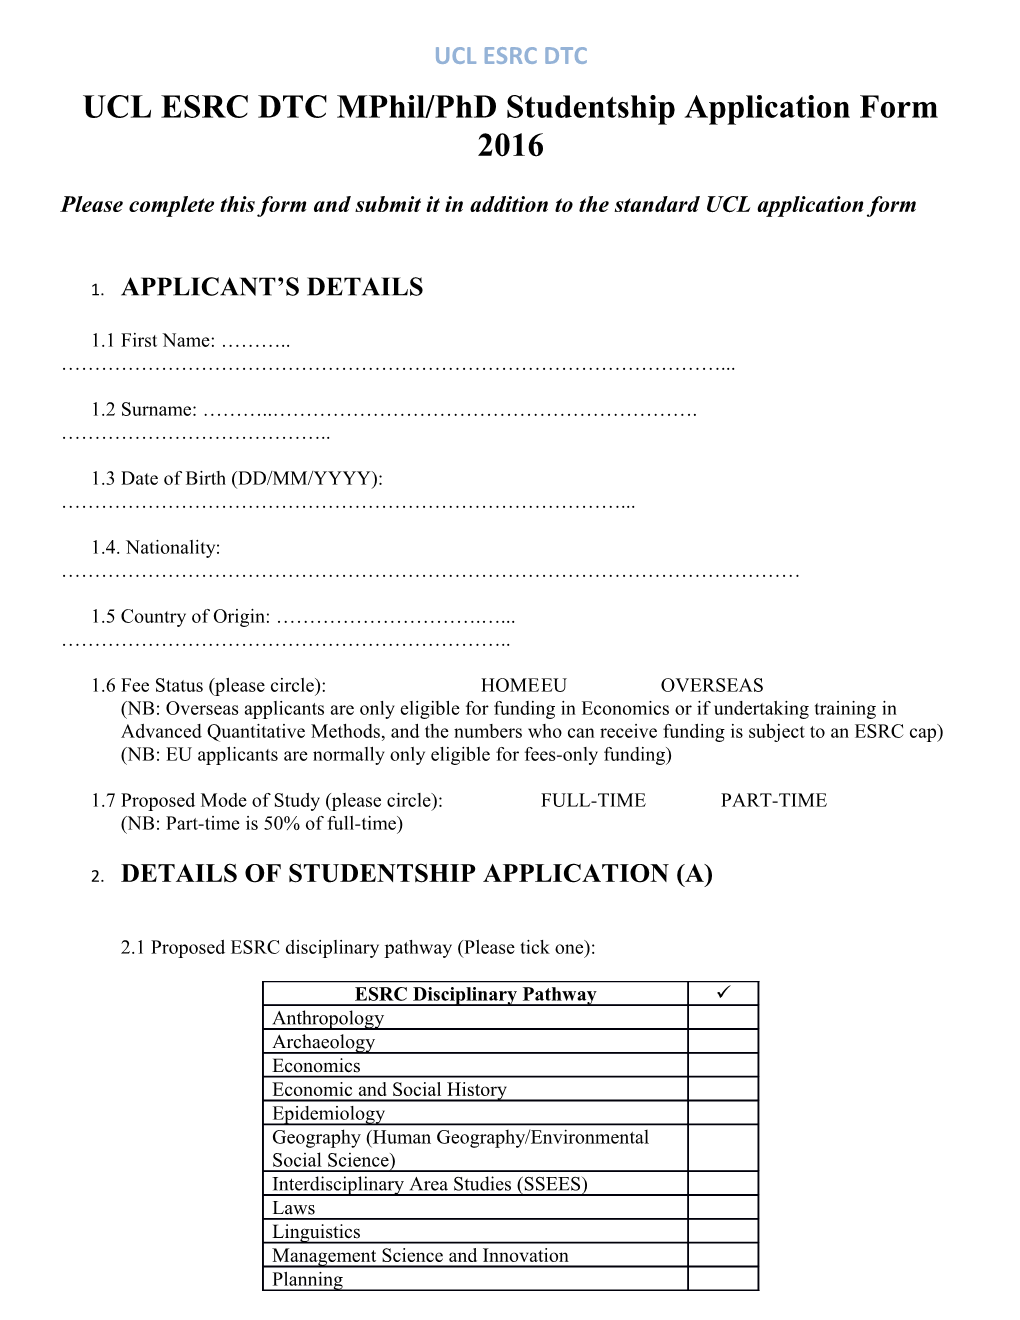 UCL ESRC DTC Mphil/Phd Studentship Application Form